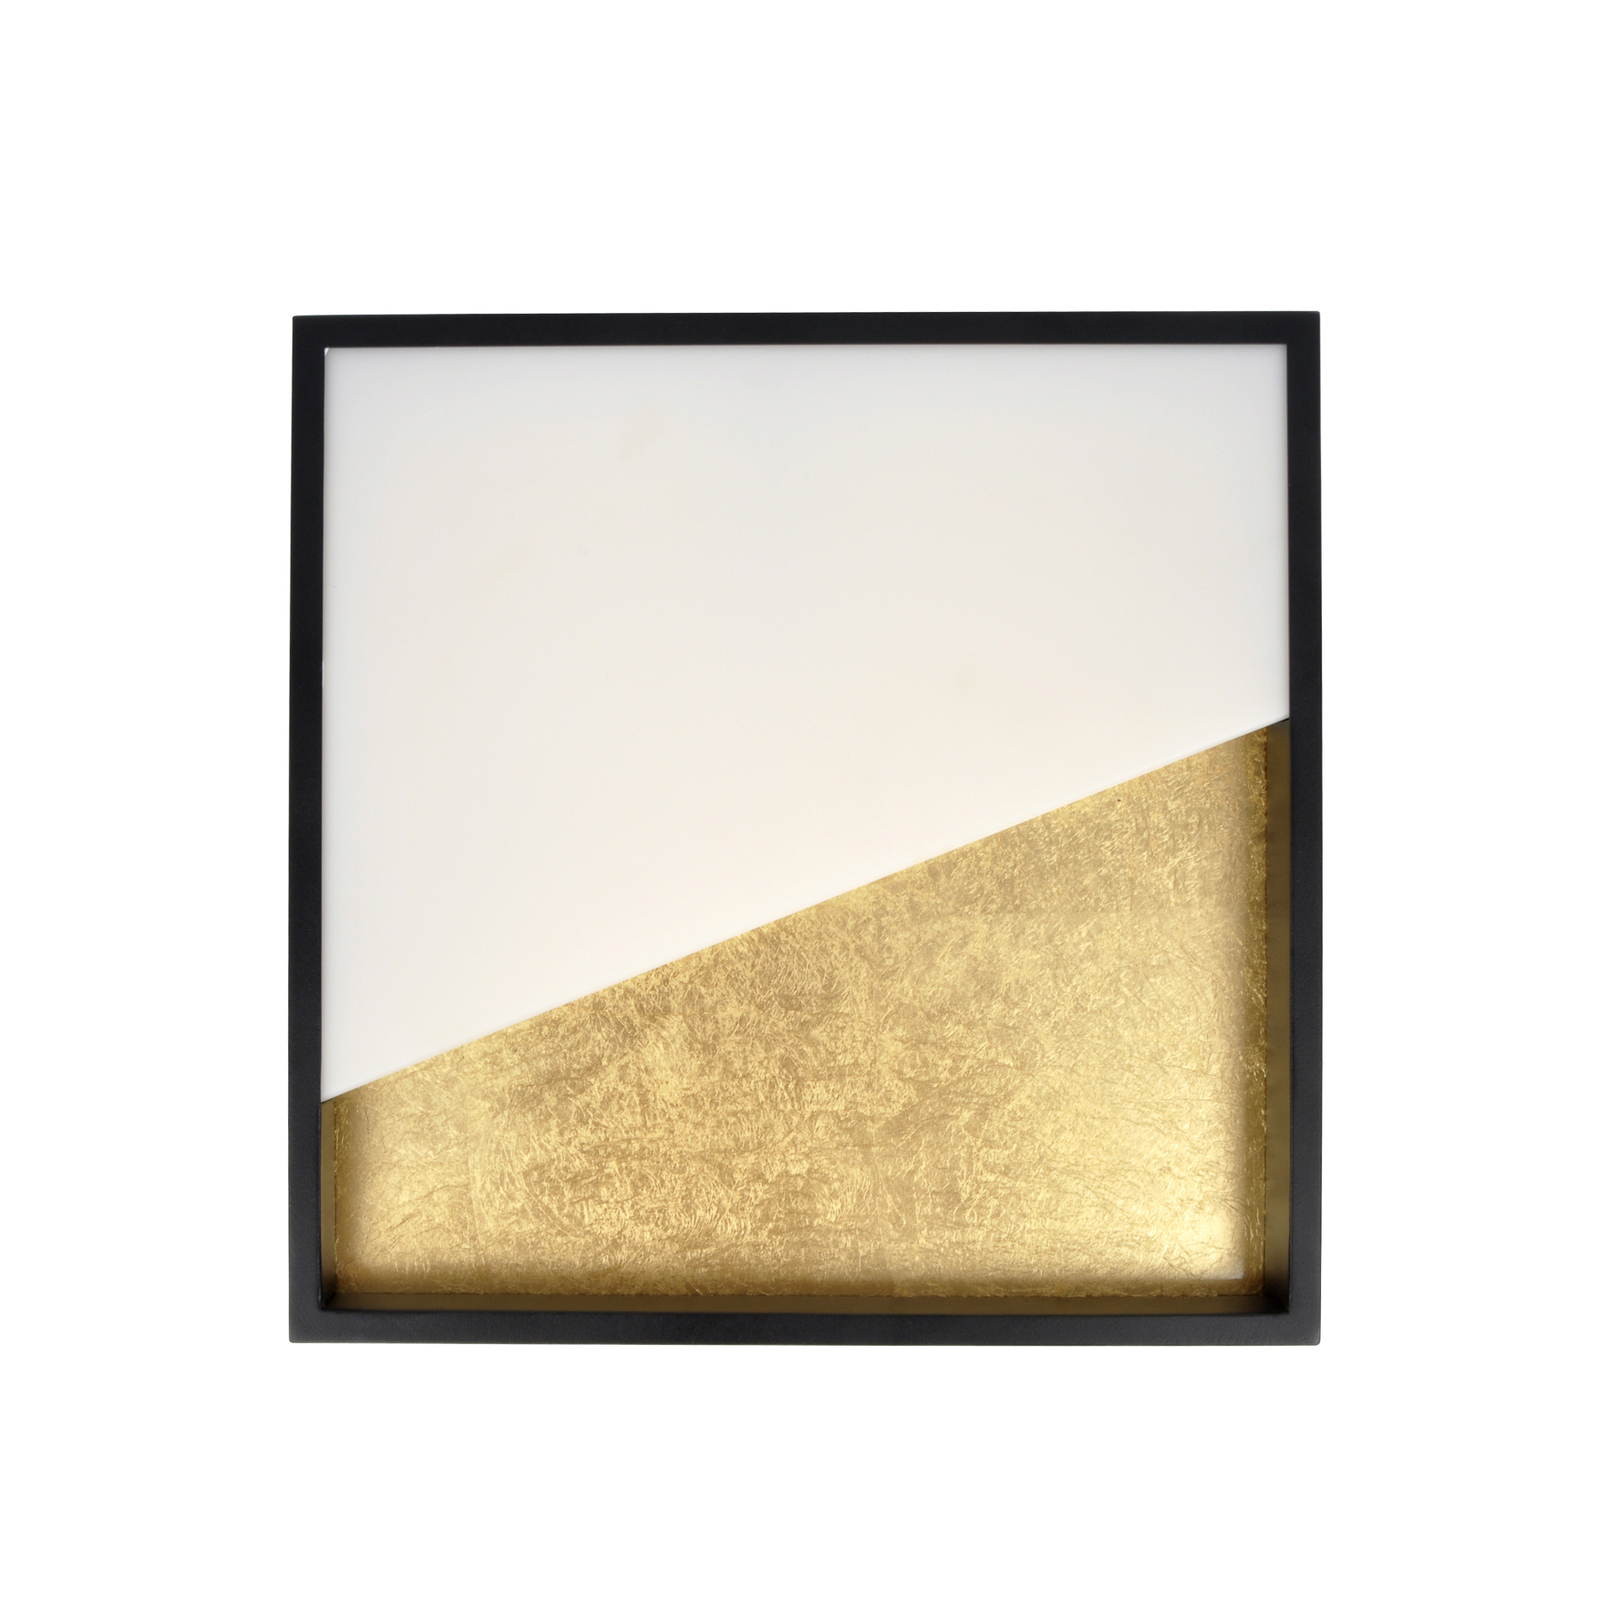 Vista LED wandlamp, goud/zwart, 30 x 30 cm